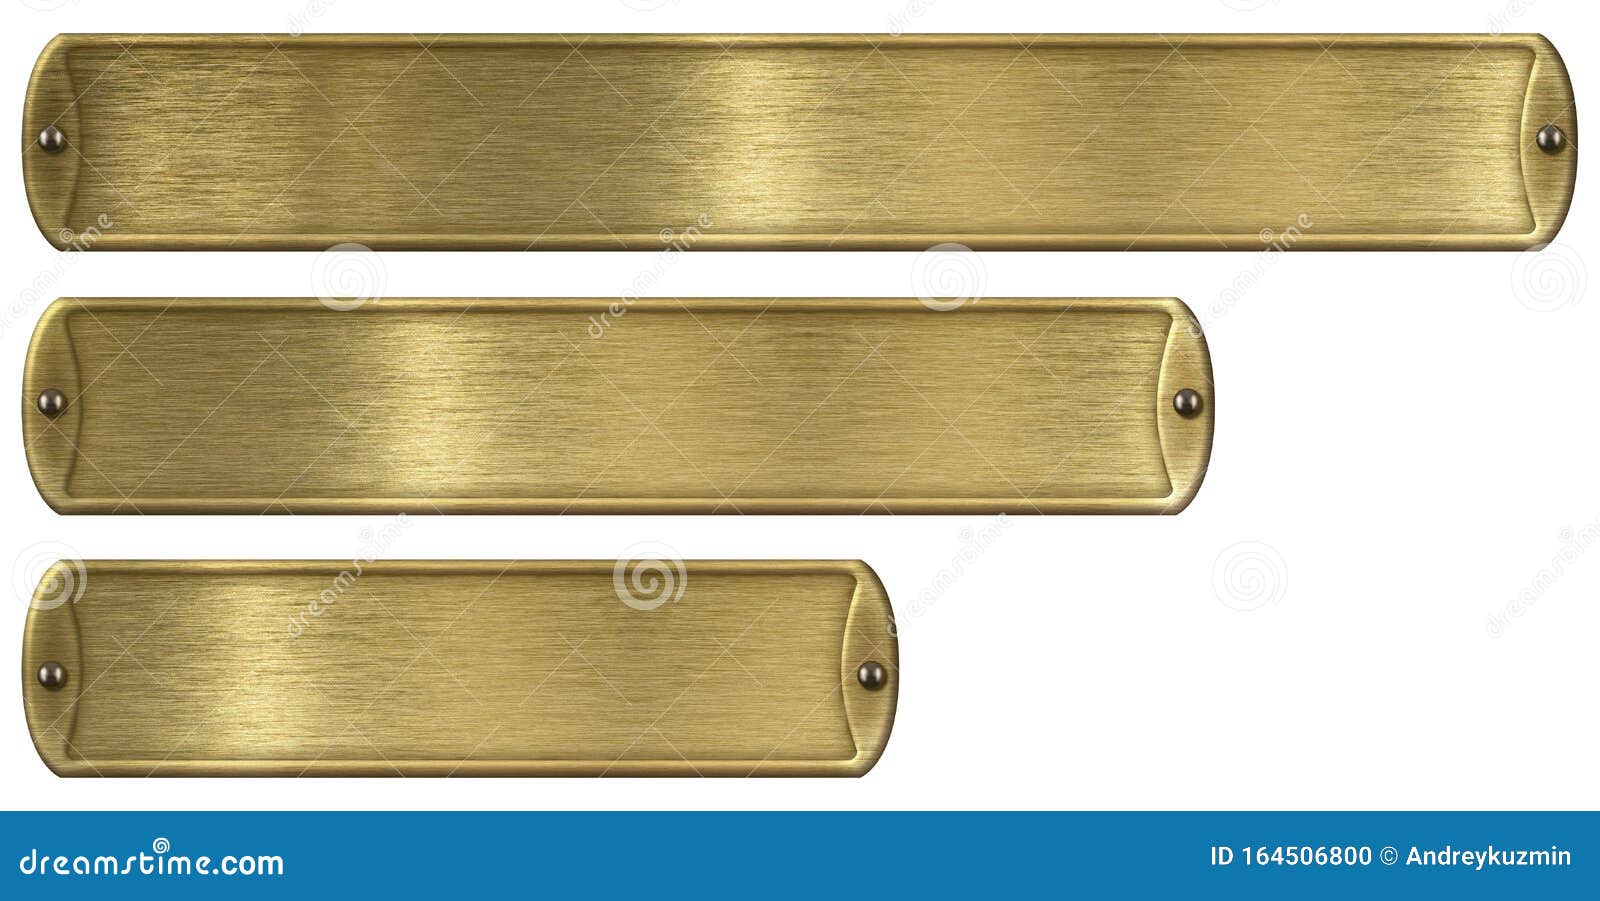 gold or brass brushed metal plates set 